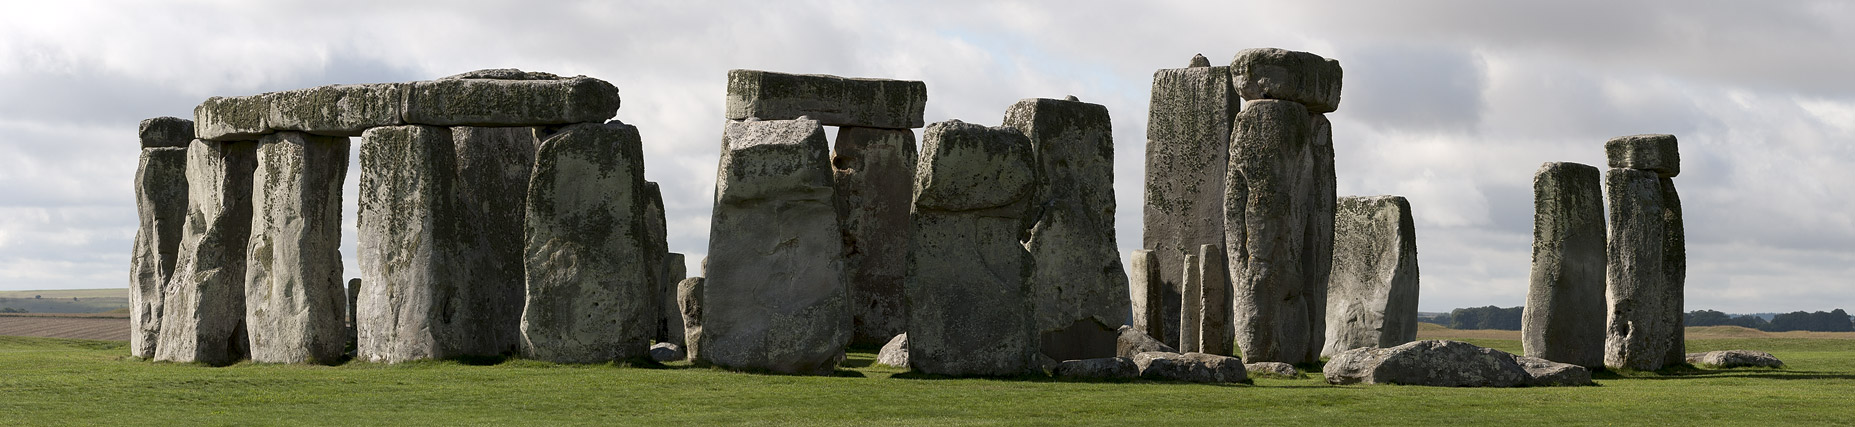 Stonehenge, cercle de grès sarsen - Amesbury - Wiltshire - Angleterre / England - Royaume-Uni / United Kingdom - Sites - Photographie - 00